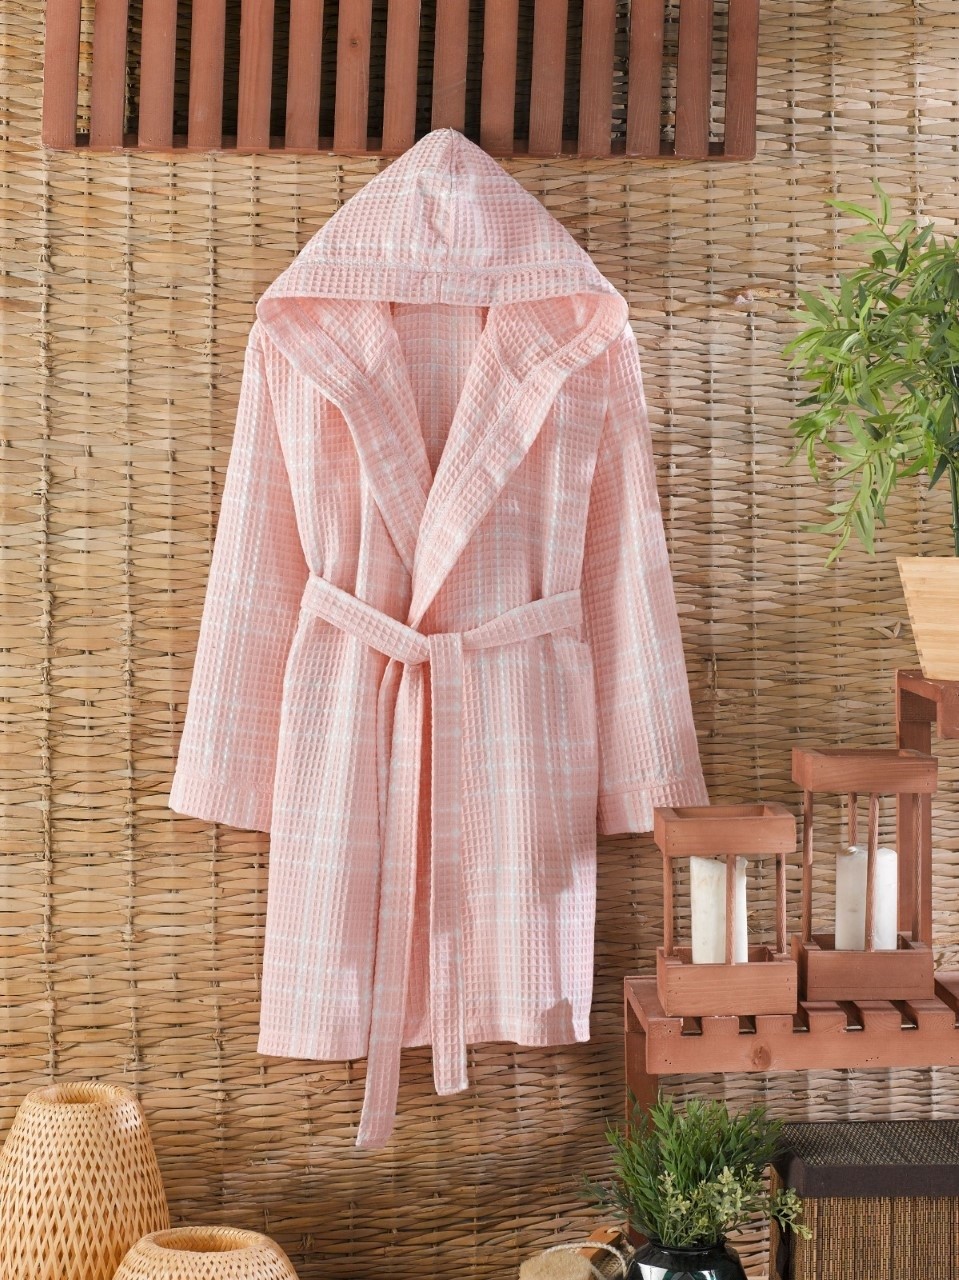 Банный халат Velda цвет: розовый (XL), размер xL pis903969 Банный халат Velda цвет: розовый (XL) - фото 1